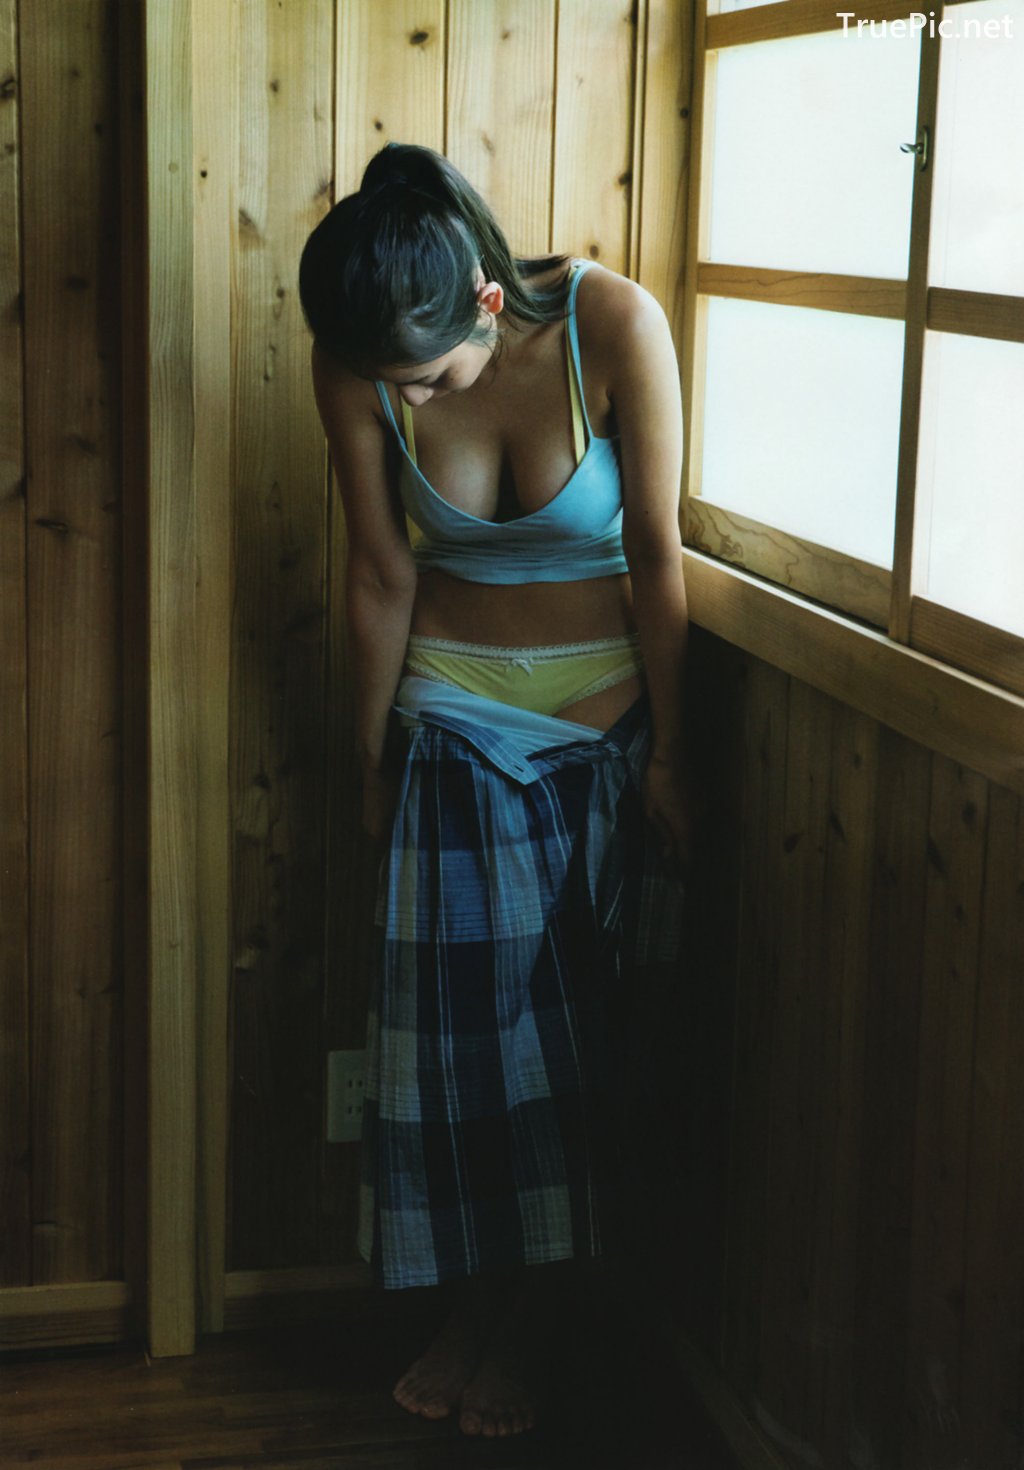 Image-Japanese-Actress-Gravure-Idol-Moemi-Katayama-Mermaid-From-Tokyo-Japan-TruePic.net- Picture-63